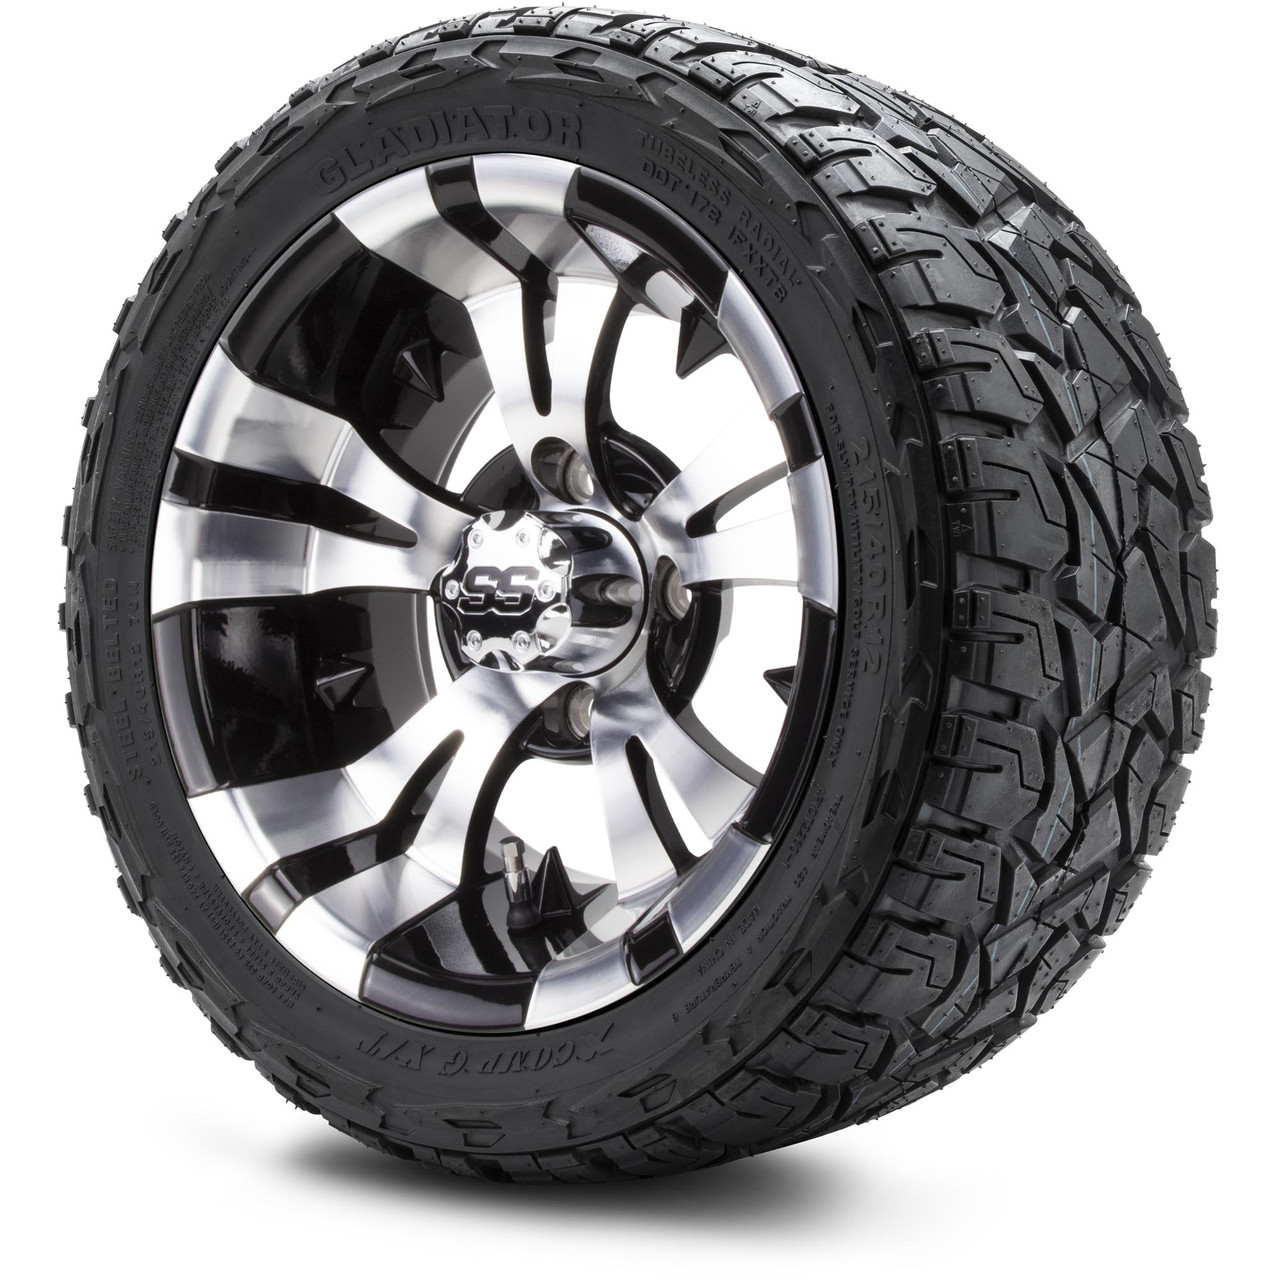 MODZ 12" Vampire Machined Black Wheels & Off-Road Tires Combo